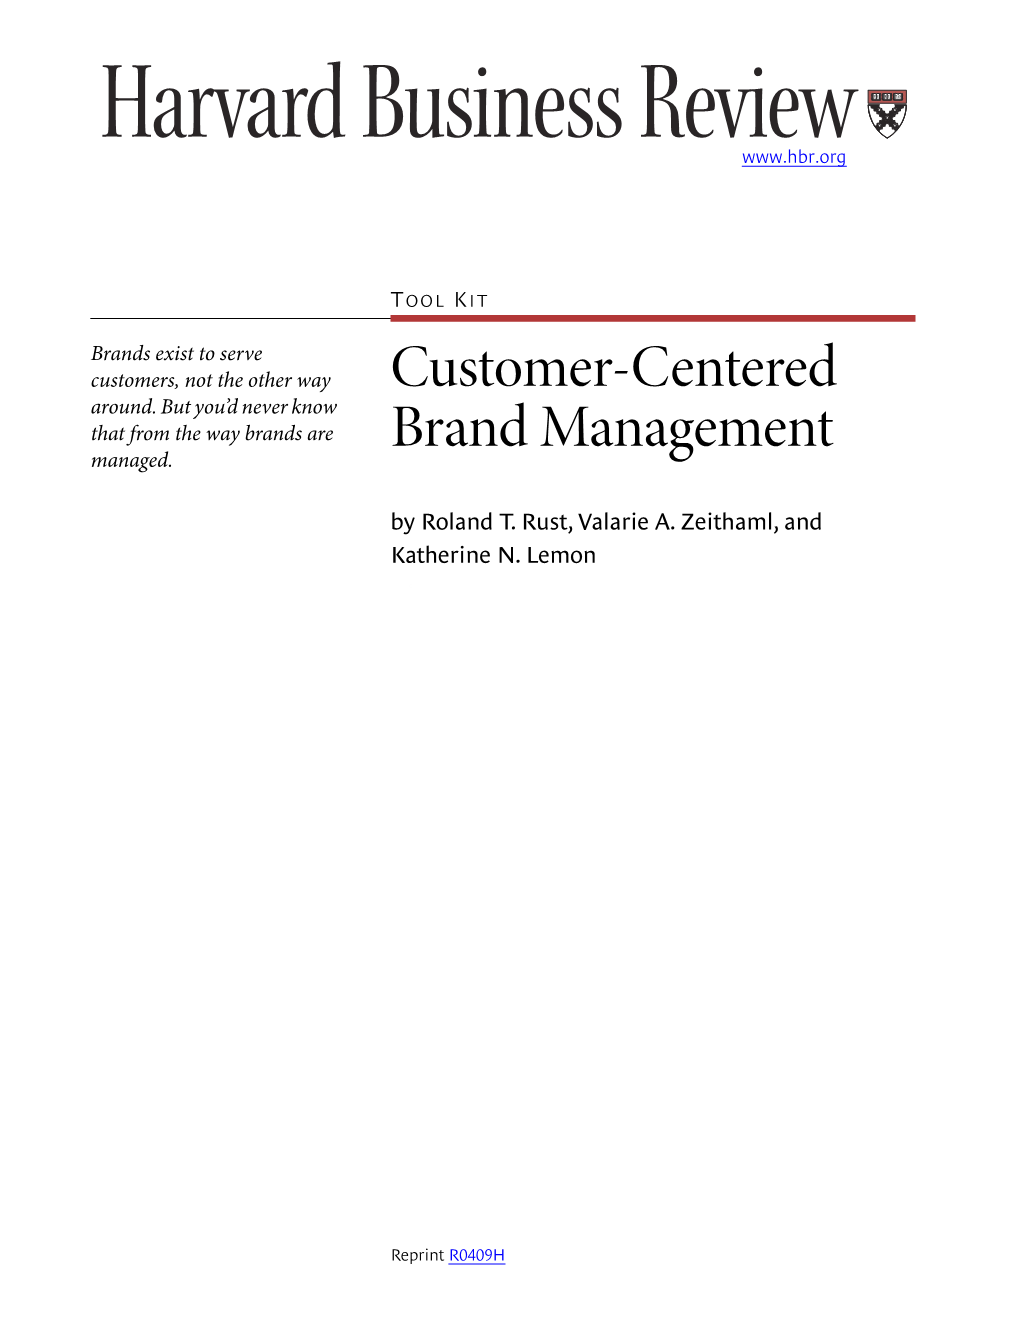 Customer-Centered Brand Management